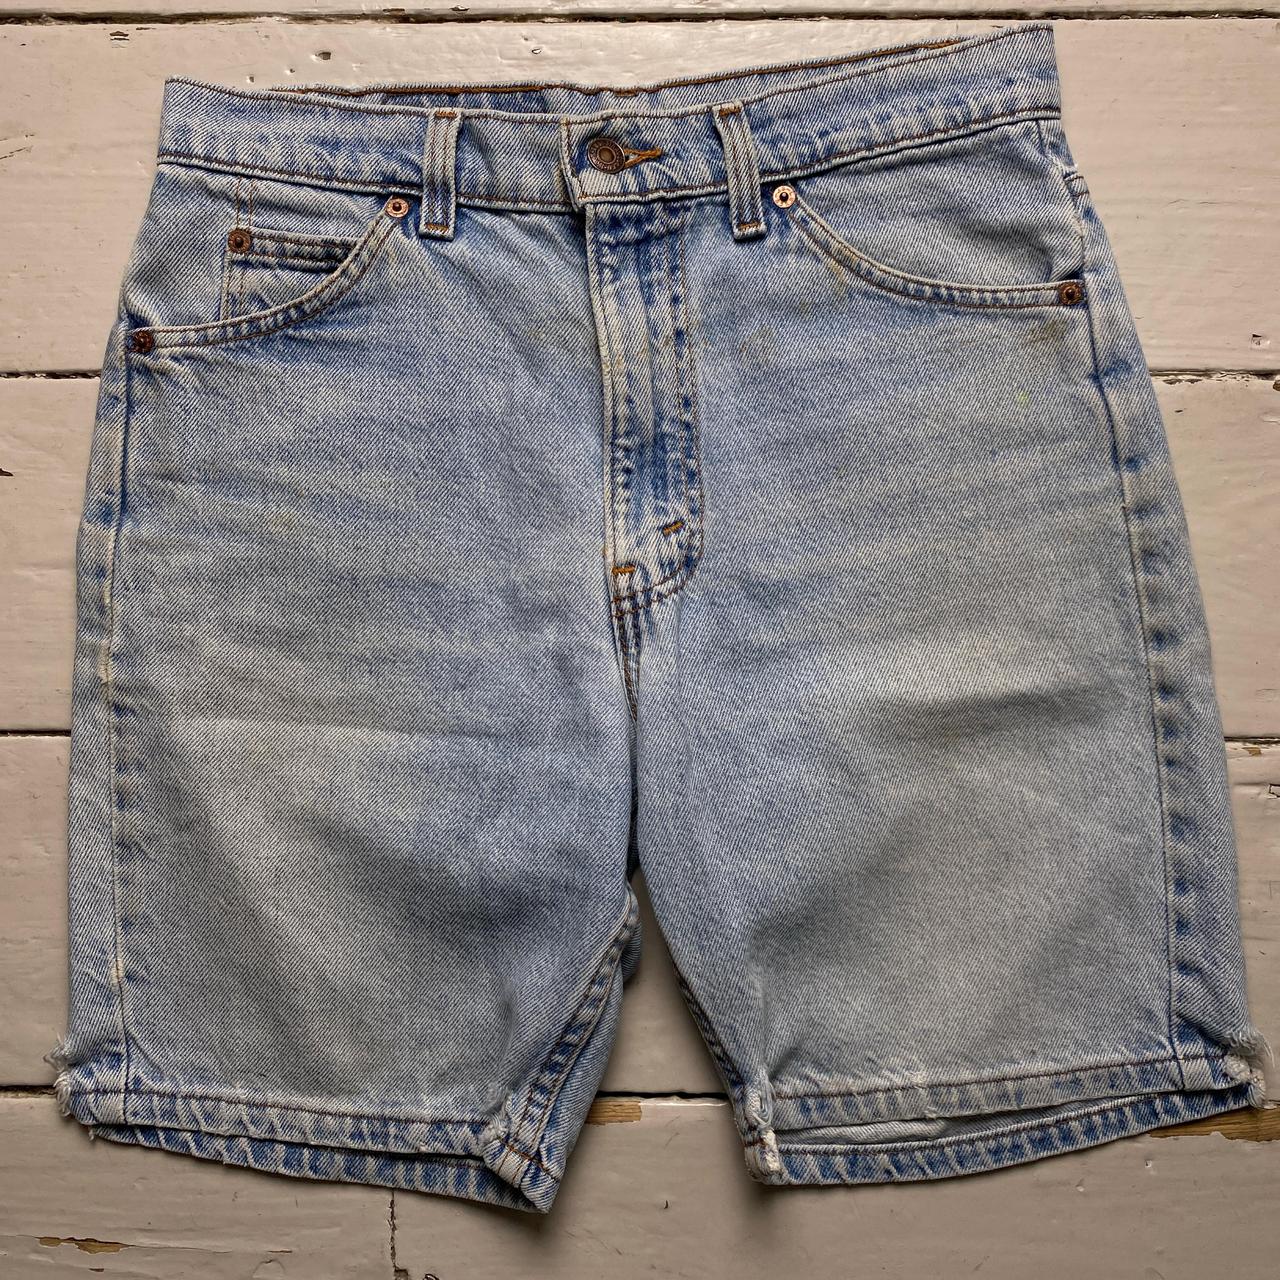 Levis 505 Vintage Stonewash Light Blue Denim Jort Jean Shorts